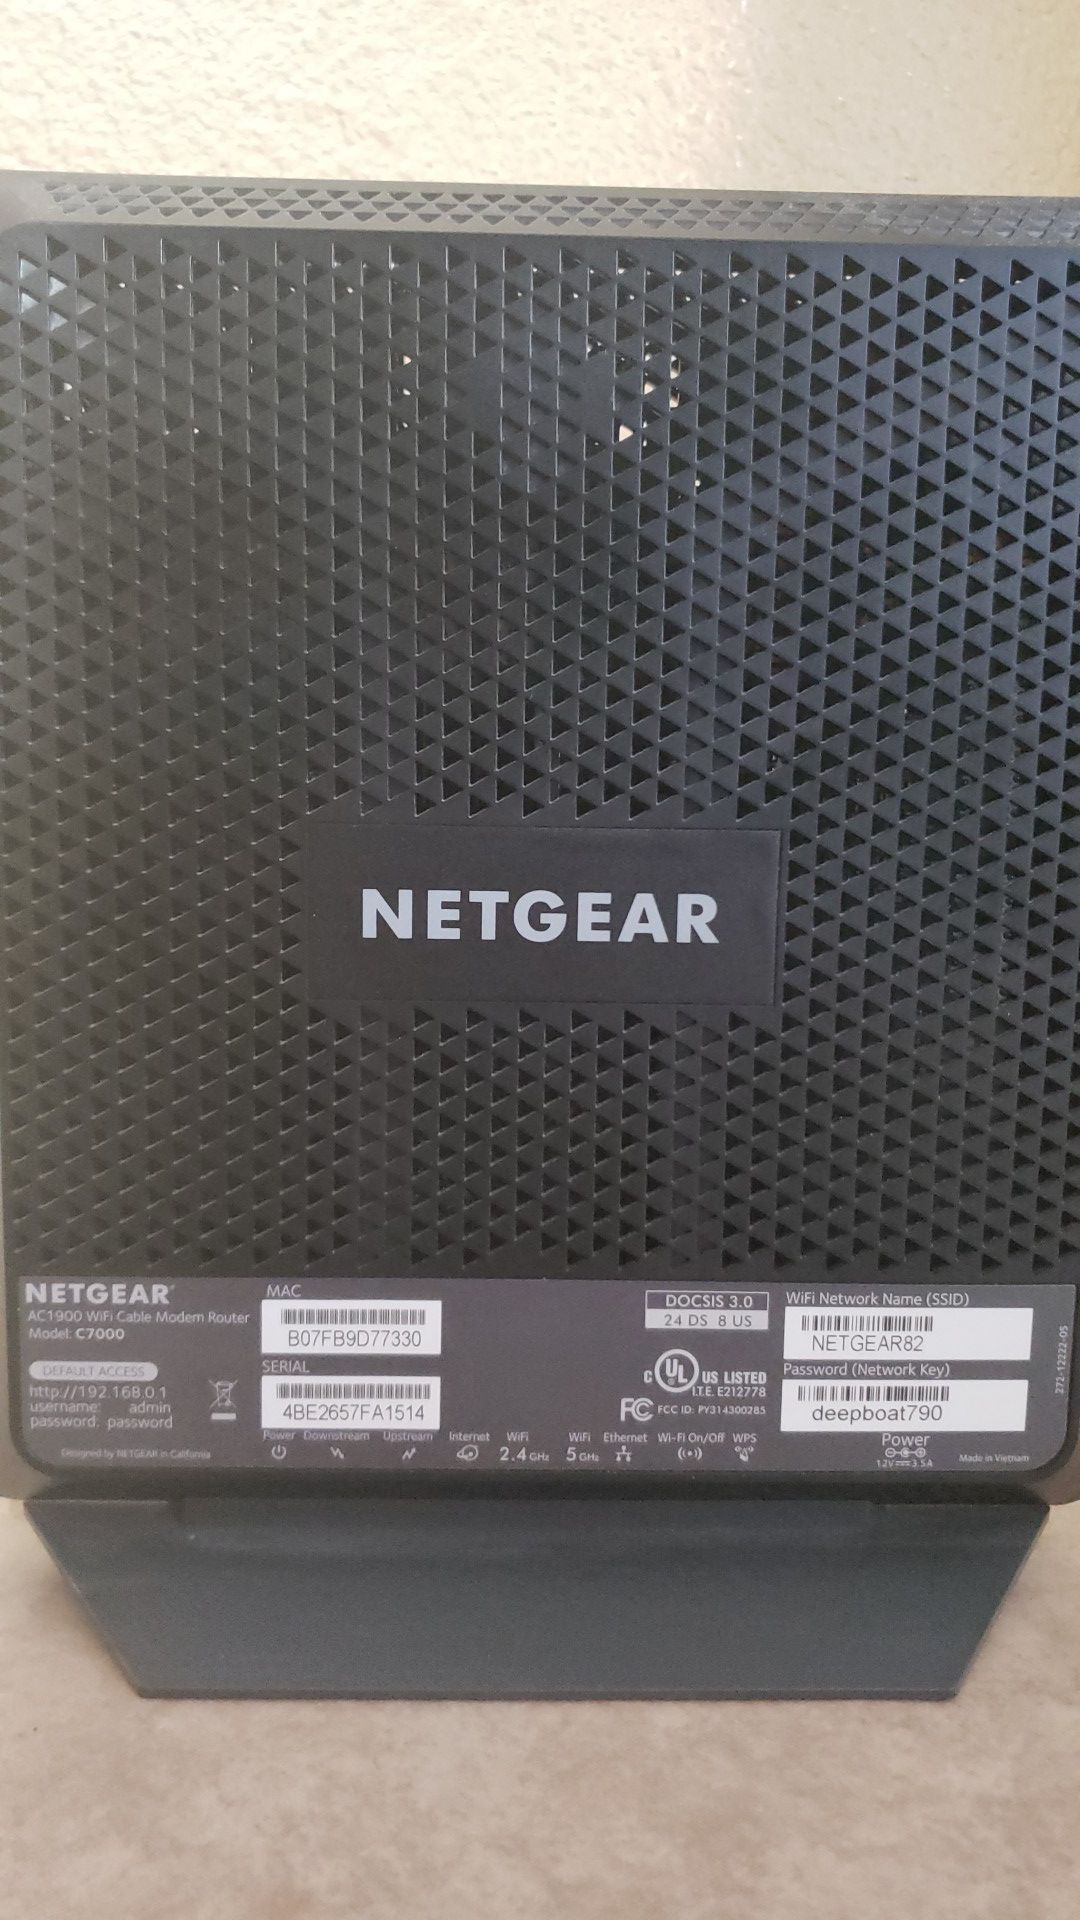 Netgear C7000 Nighthawk AC1900 WiFi cable modem router